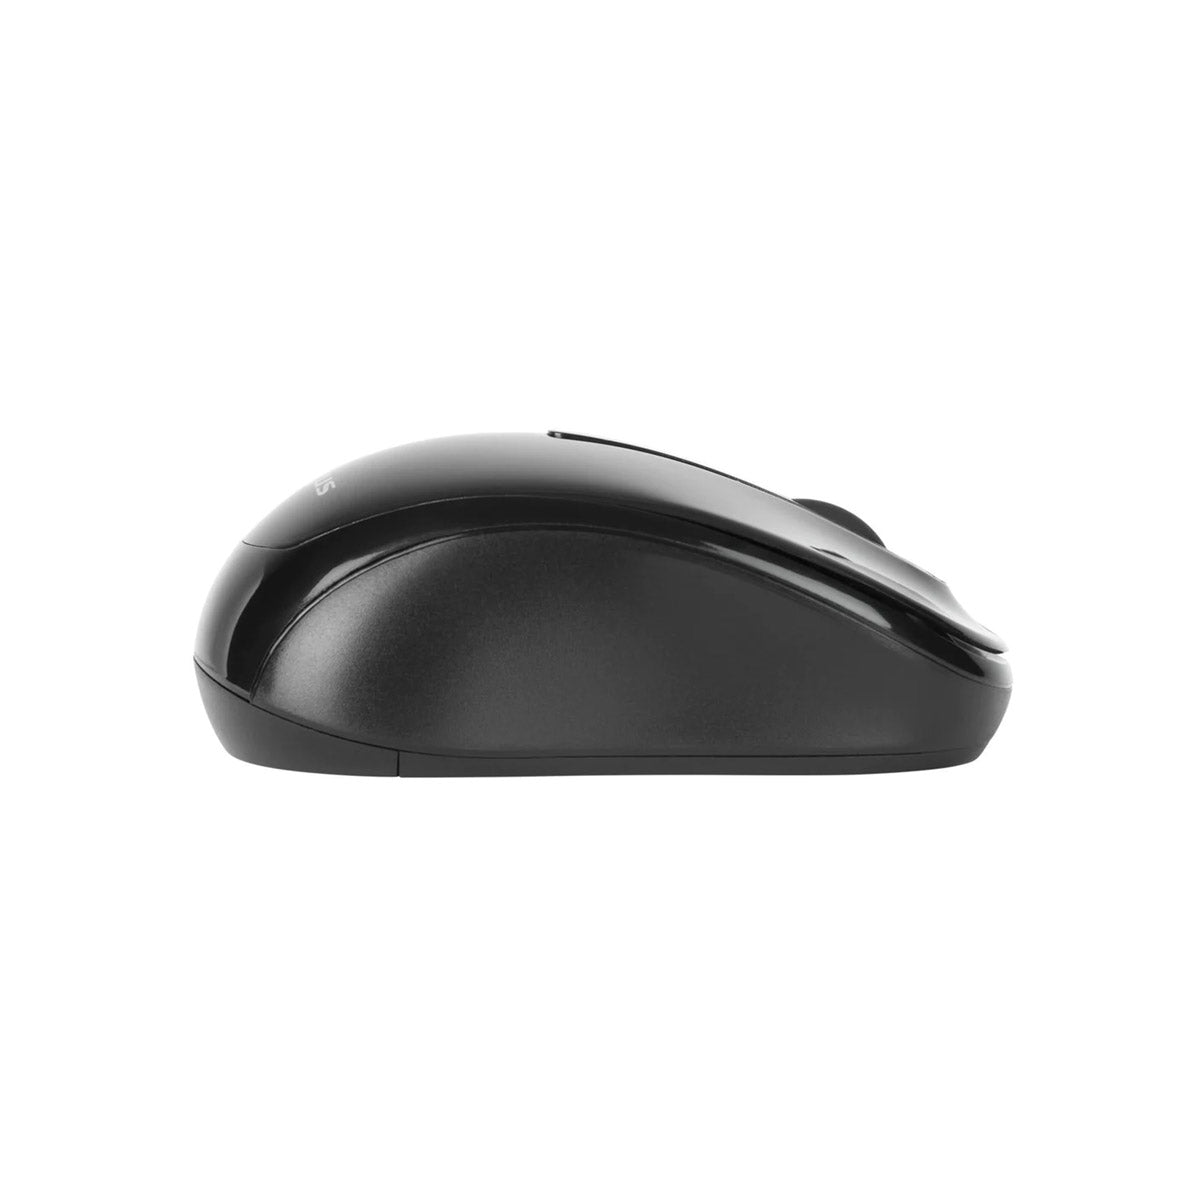 Targus W600 Wireless Optical Mouse 無線滑鼠